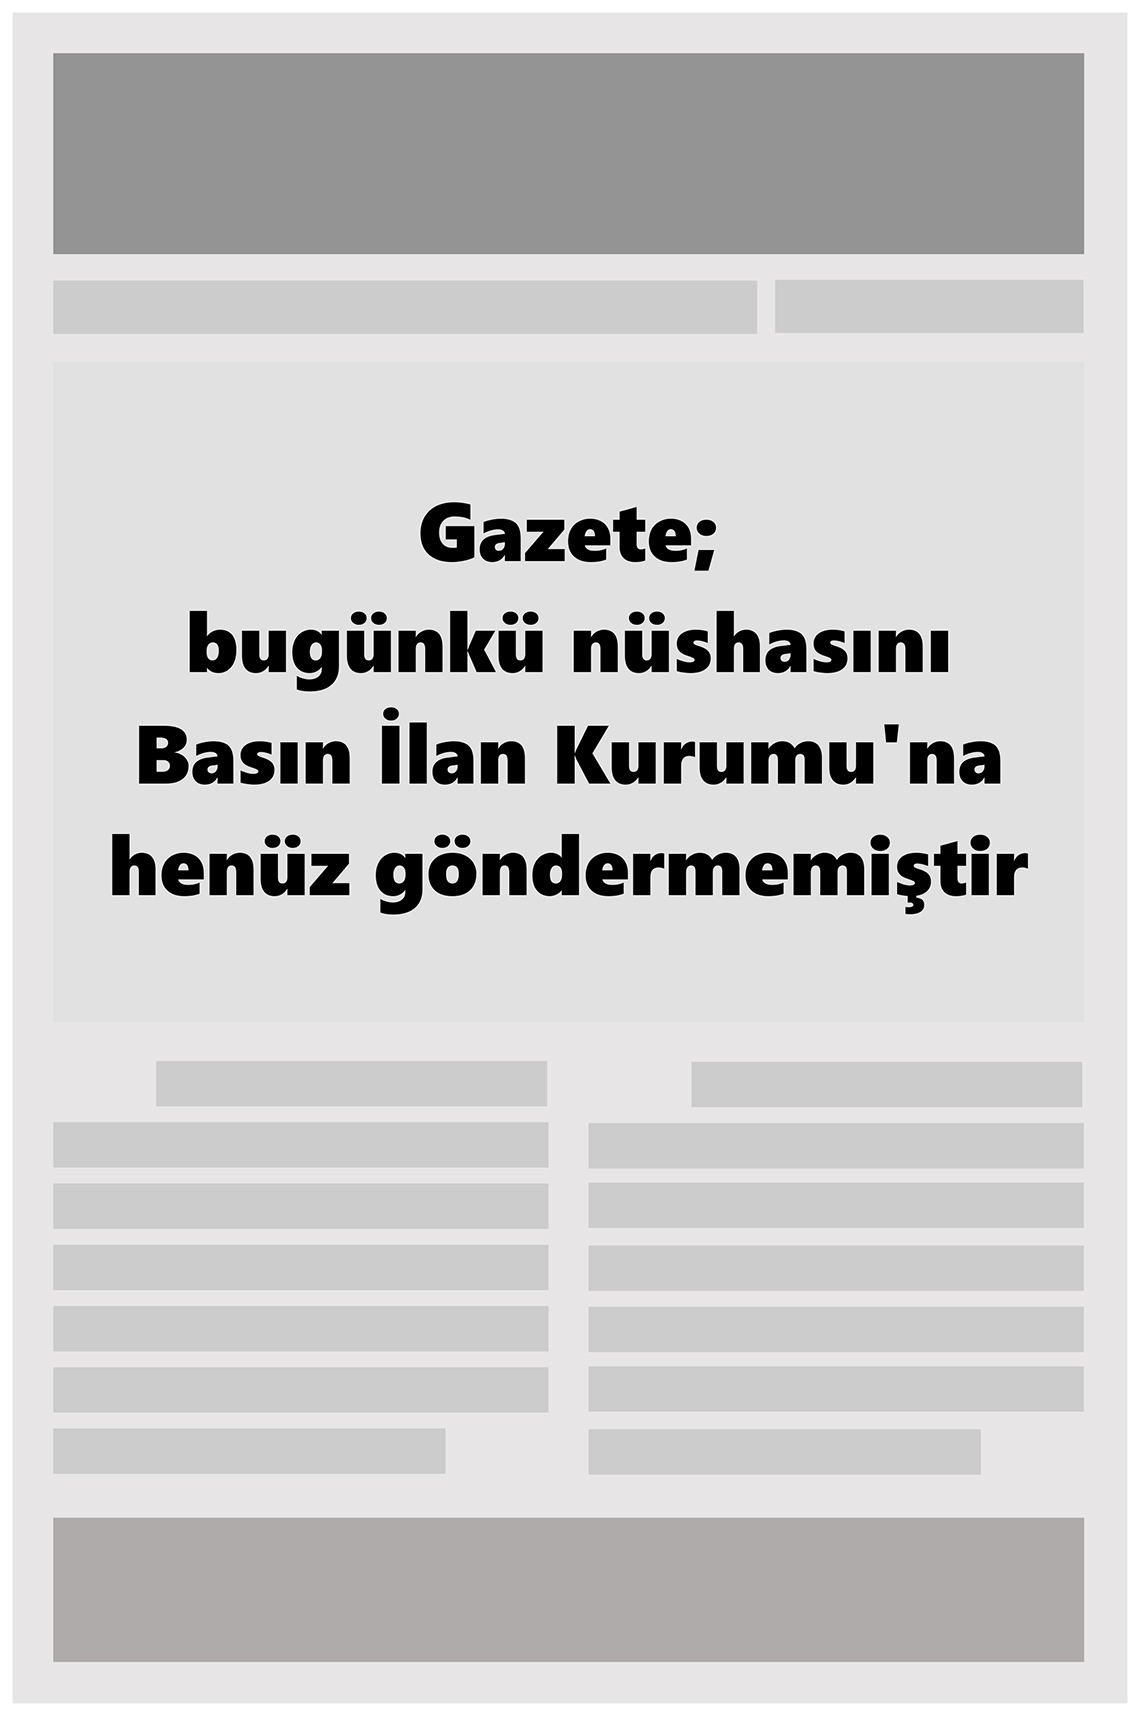 Gaziantep Pusula Gazete Manşeti